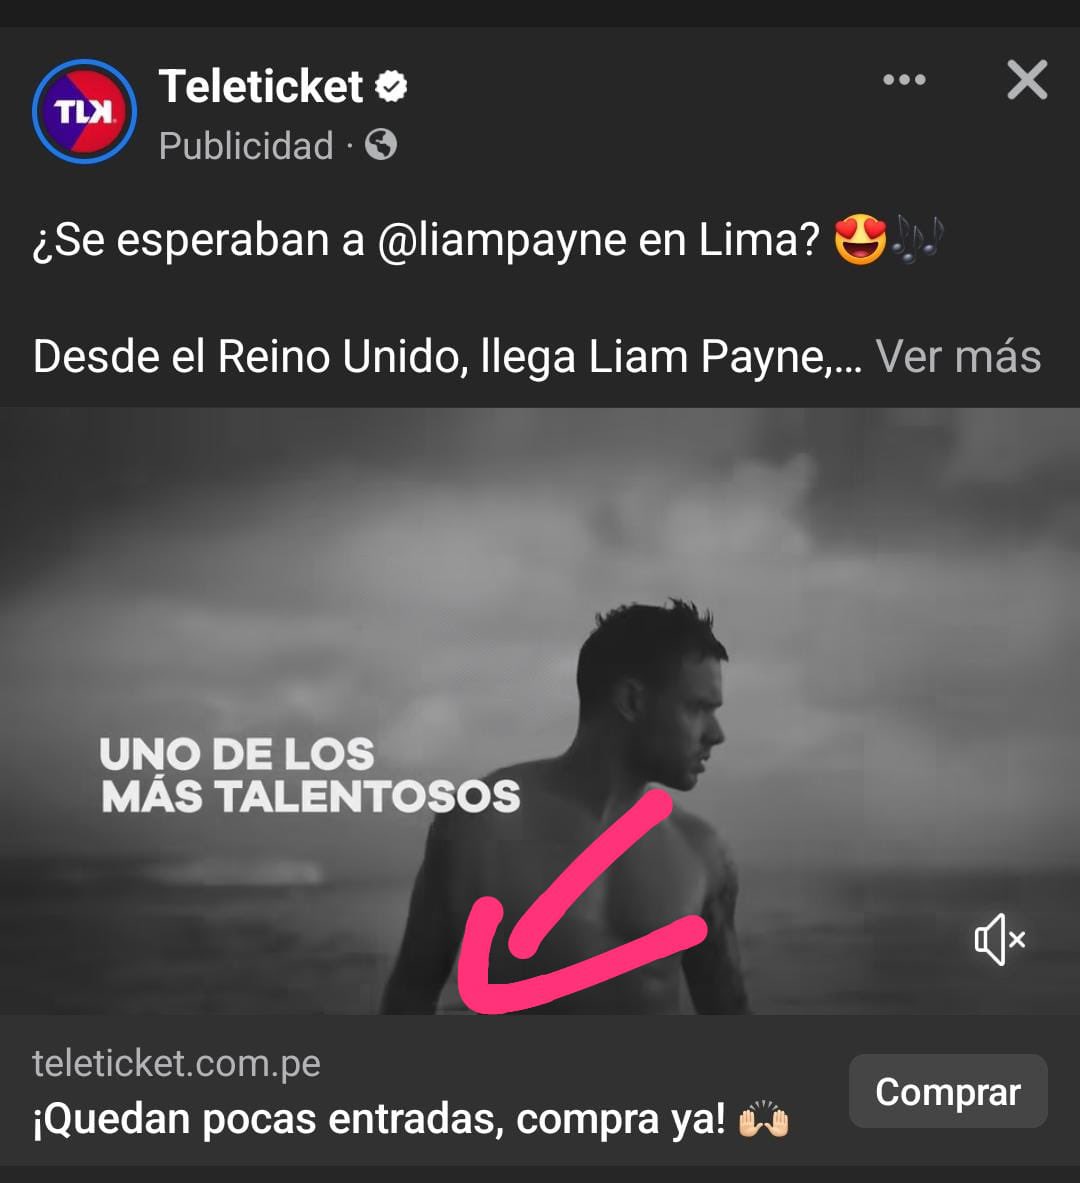 [INFO] PERU! 🇵🇪 TELETICKET publico que quedan pocas entradas de preventa! No te vayas a quedar sin la tuya🧐 Compra ya! 🔗 teleticket.com.pe/liam-payne-lim… #LIAMPAYNEINPERU @LiamPayne